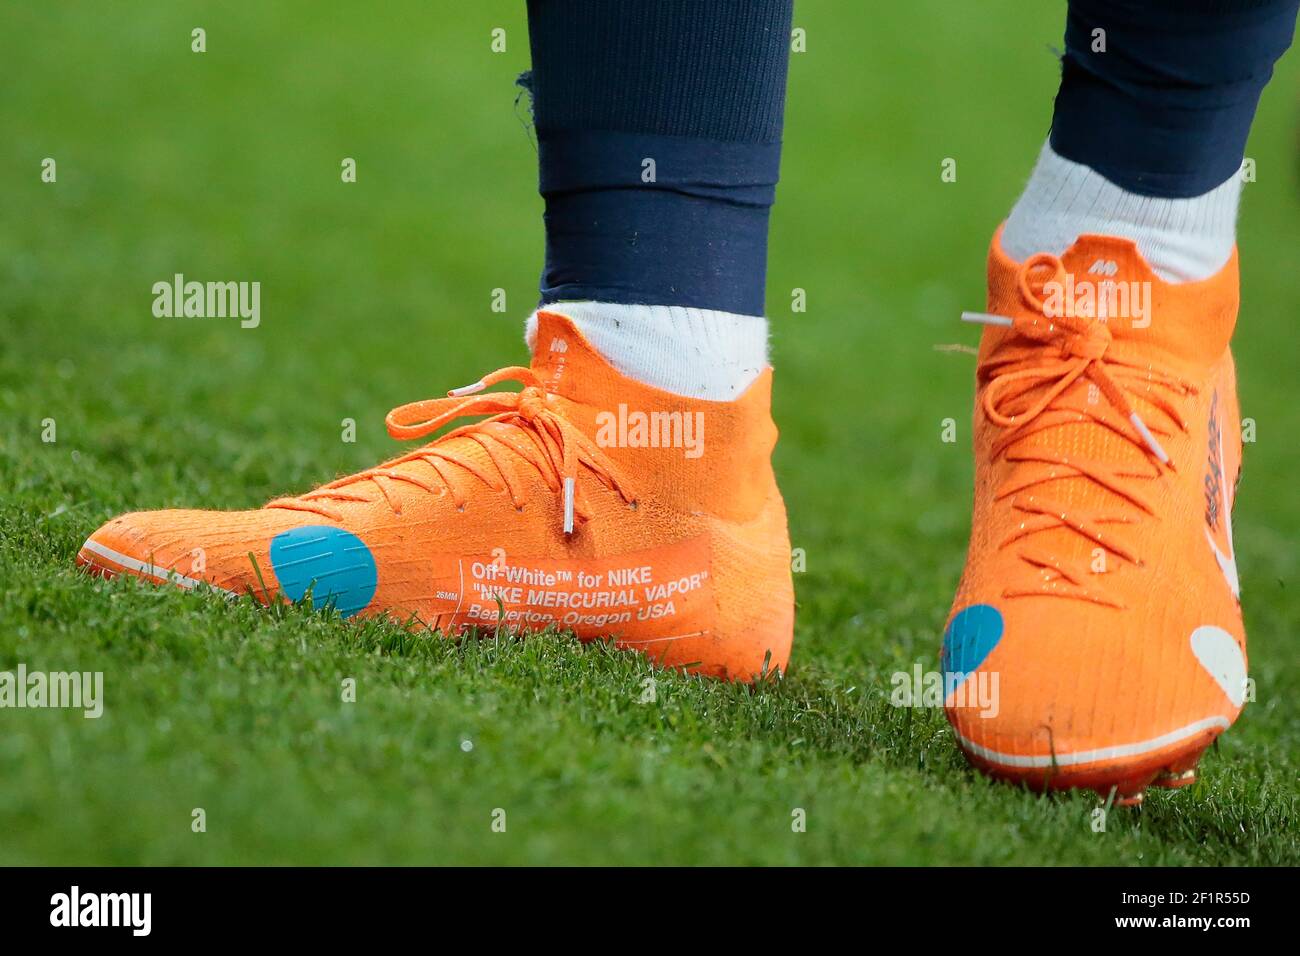 Zapatos de Kylian Mbappe (PSG), Off-White ™ para NIKE 'Nike Mercurial  Vapore' Beaverton, Oregon USA c. 2018 'KNIT', durante el campeonato francés  L1 partido de fútbol entre París Saint-Germain (PSG) y Mónaco,